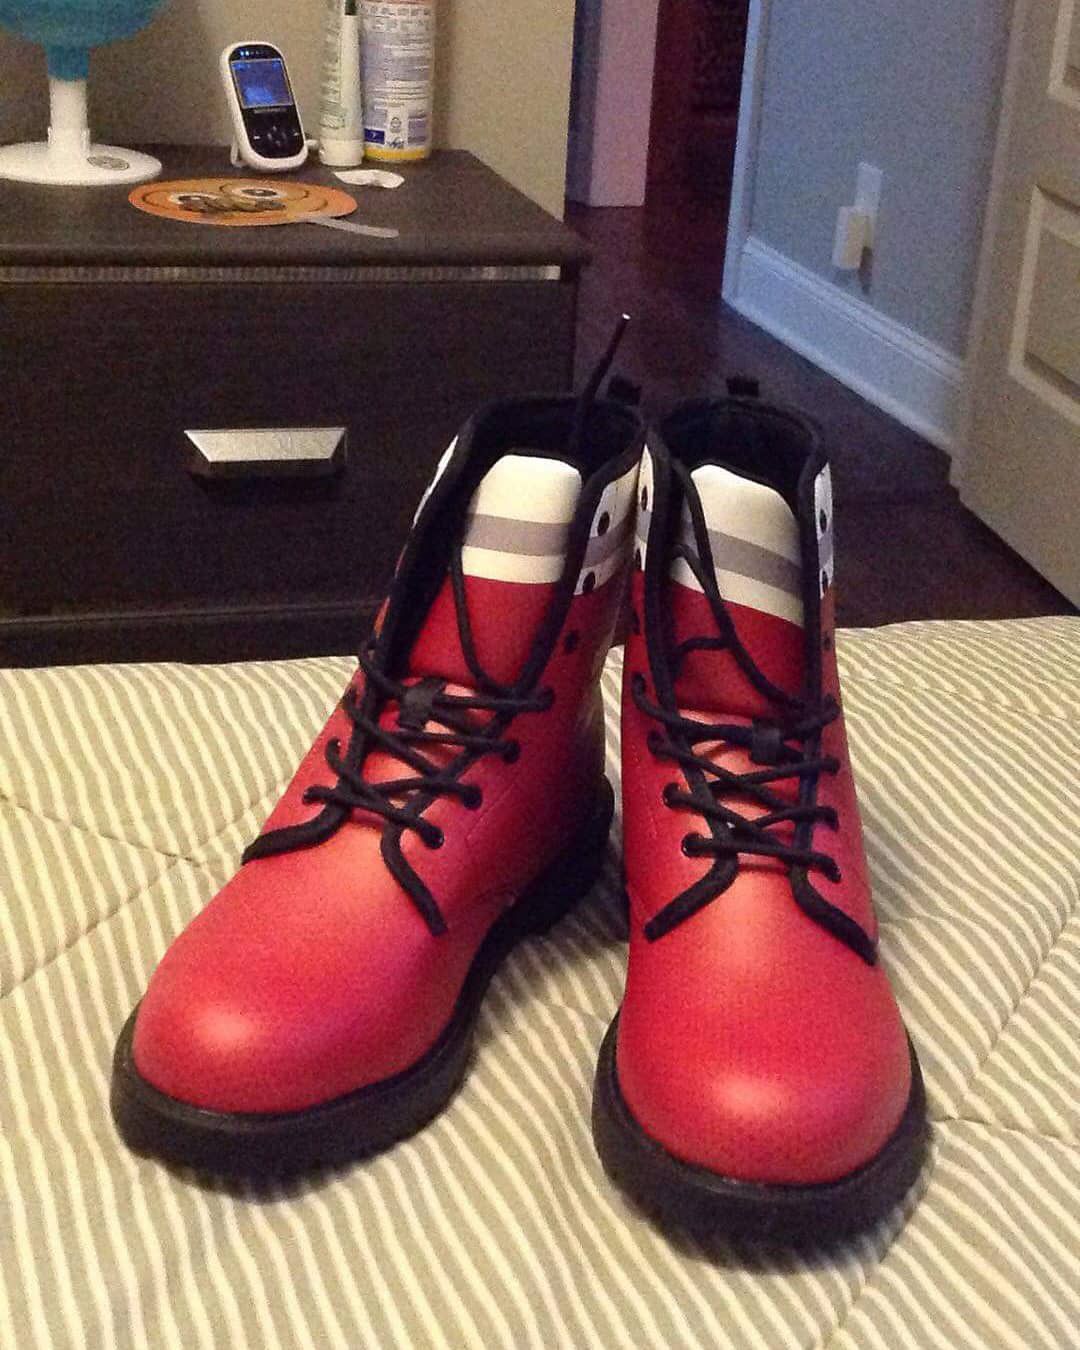 Alabama boots